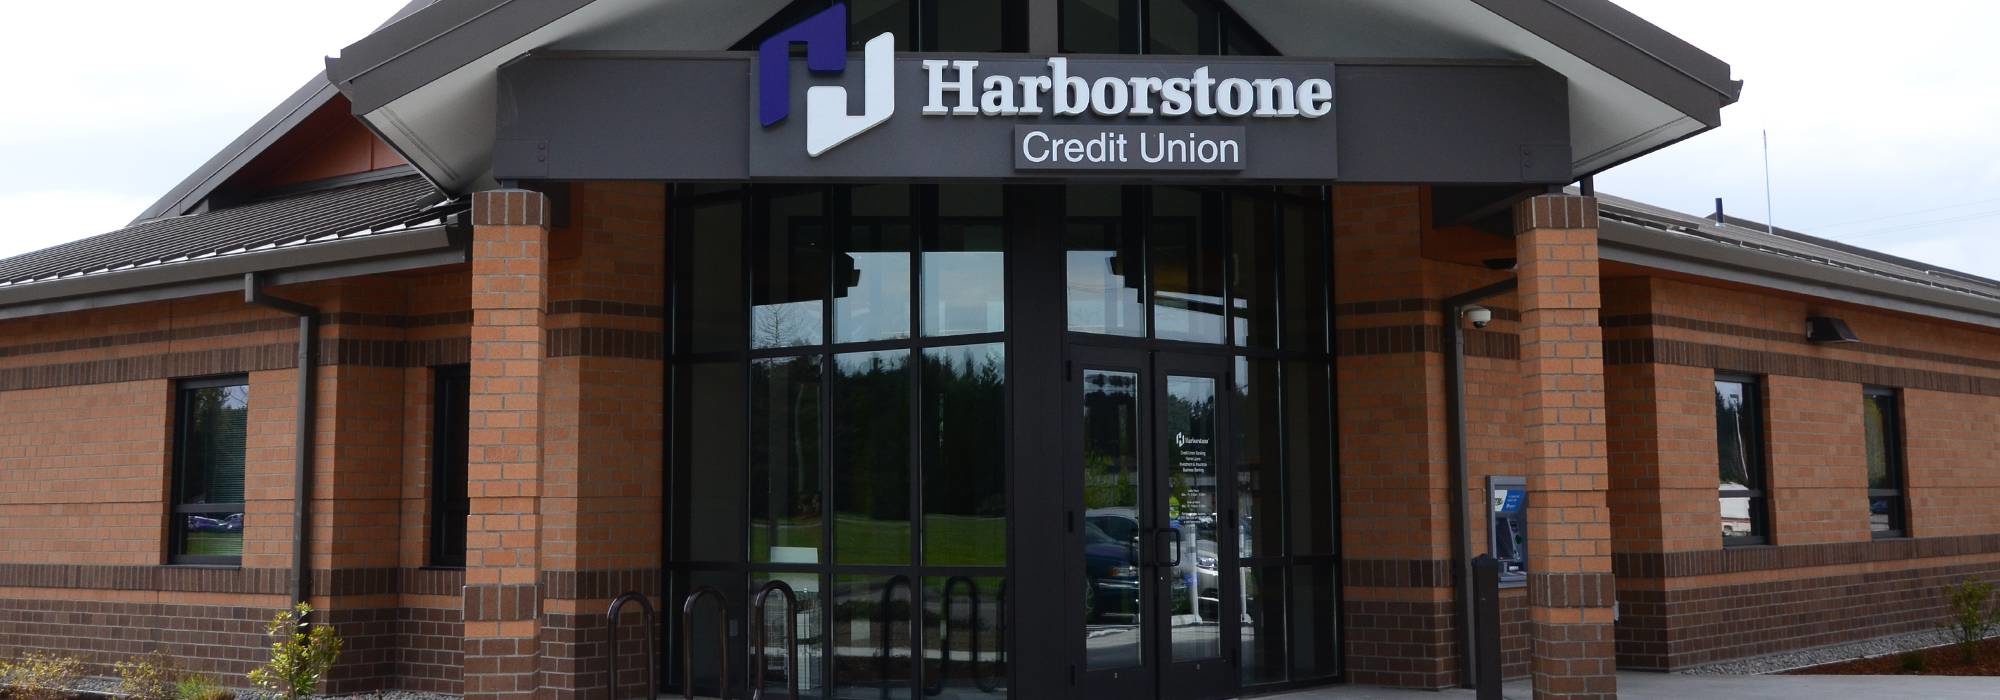 Harborstone Credit Union JBLM Branch | Korsmo